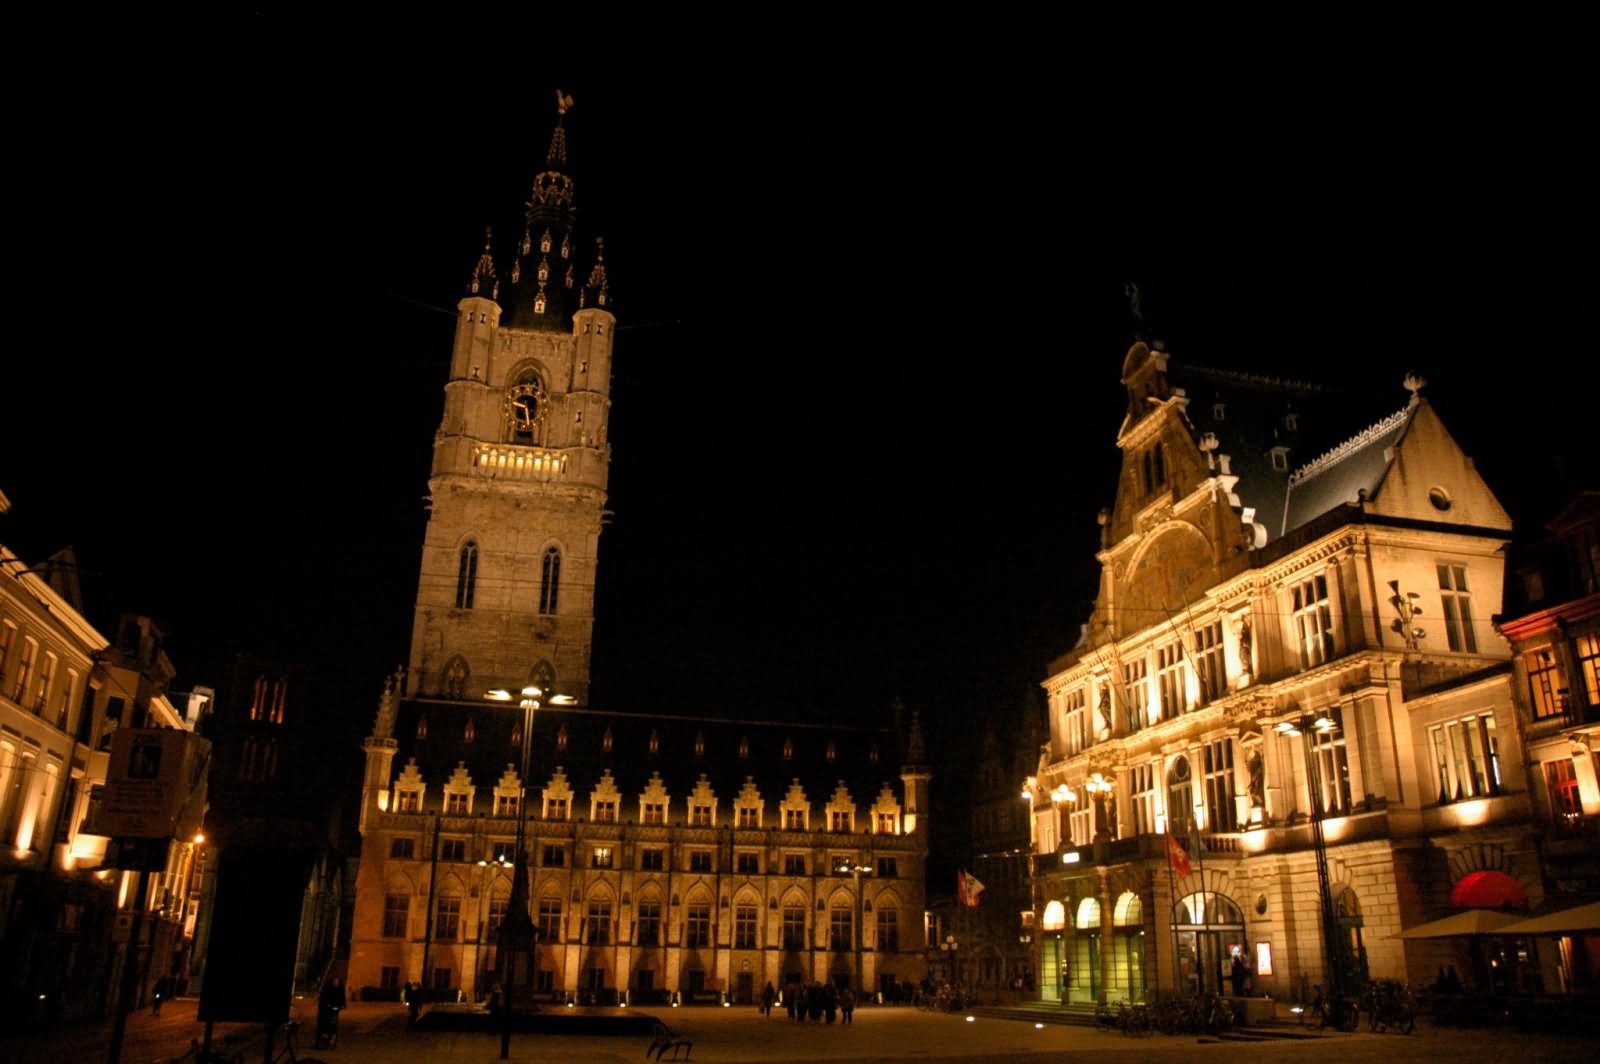 The Belfry Of Ghent In Belgium Illuminated At Night